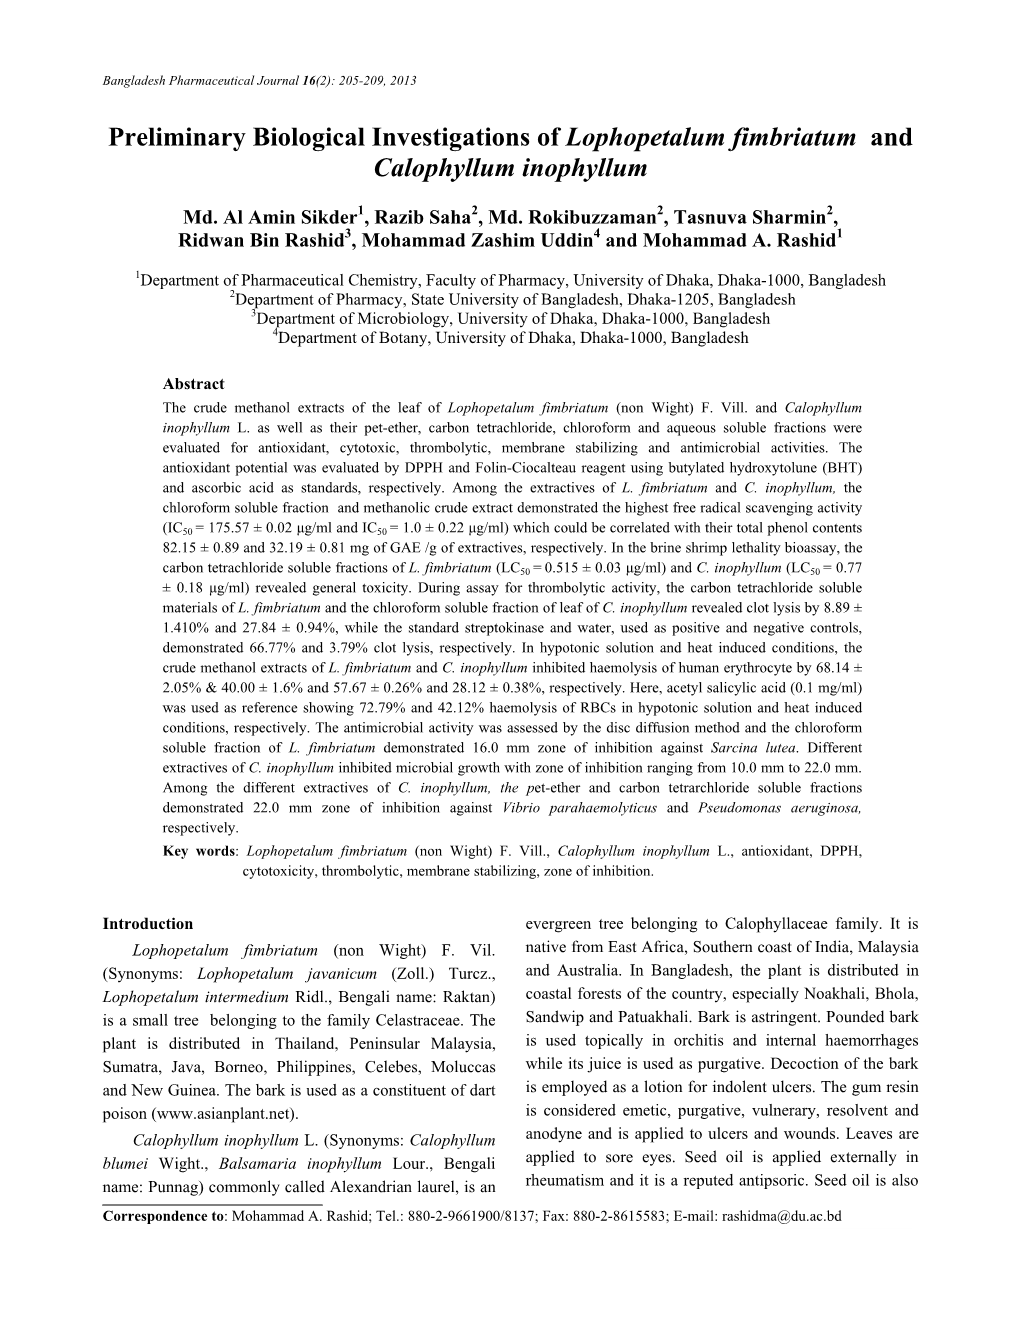 Preliminary Biological Investigations of Lophopetalum Fimbriatum and Calophyllum Inophyllum